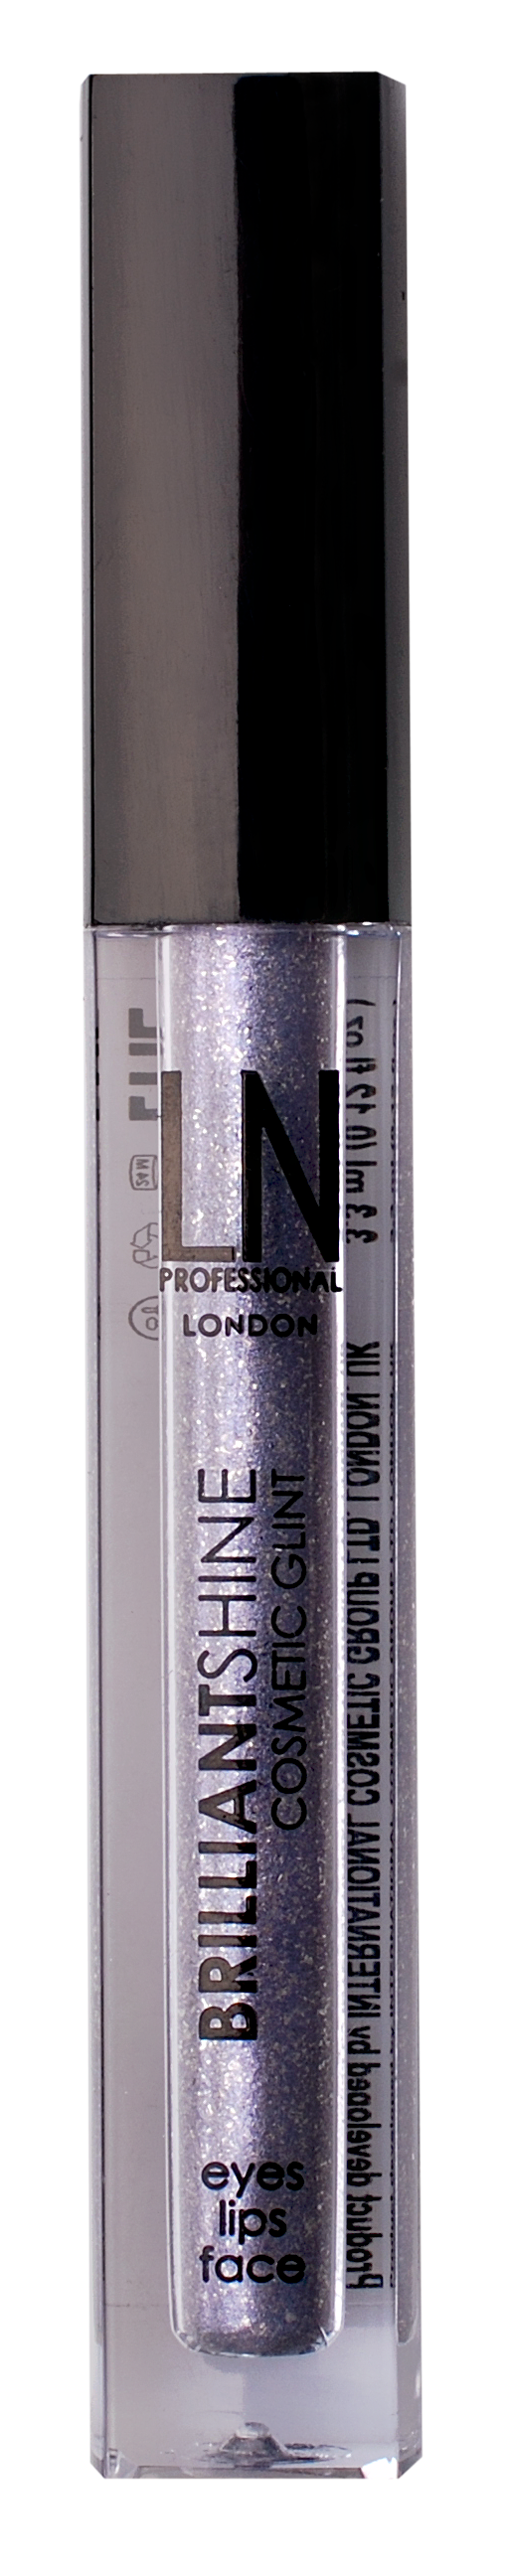 Жидкий глиттер для макияжа LN Professional Brilliantshine Cosmetic Glint, тон 08, 3,3 мл - фото 1